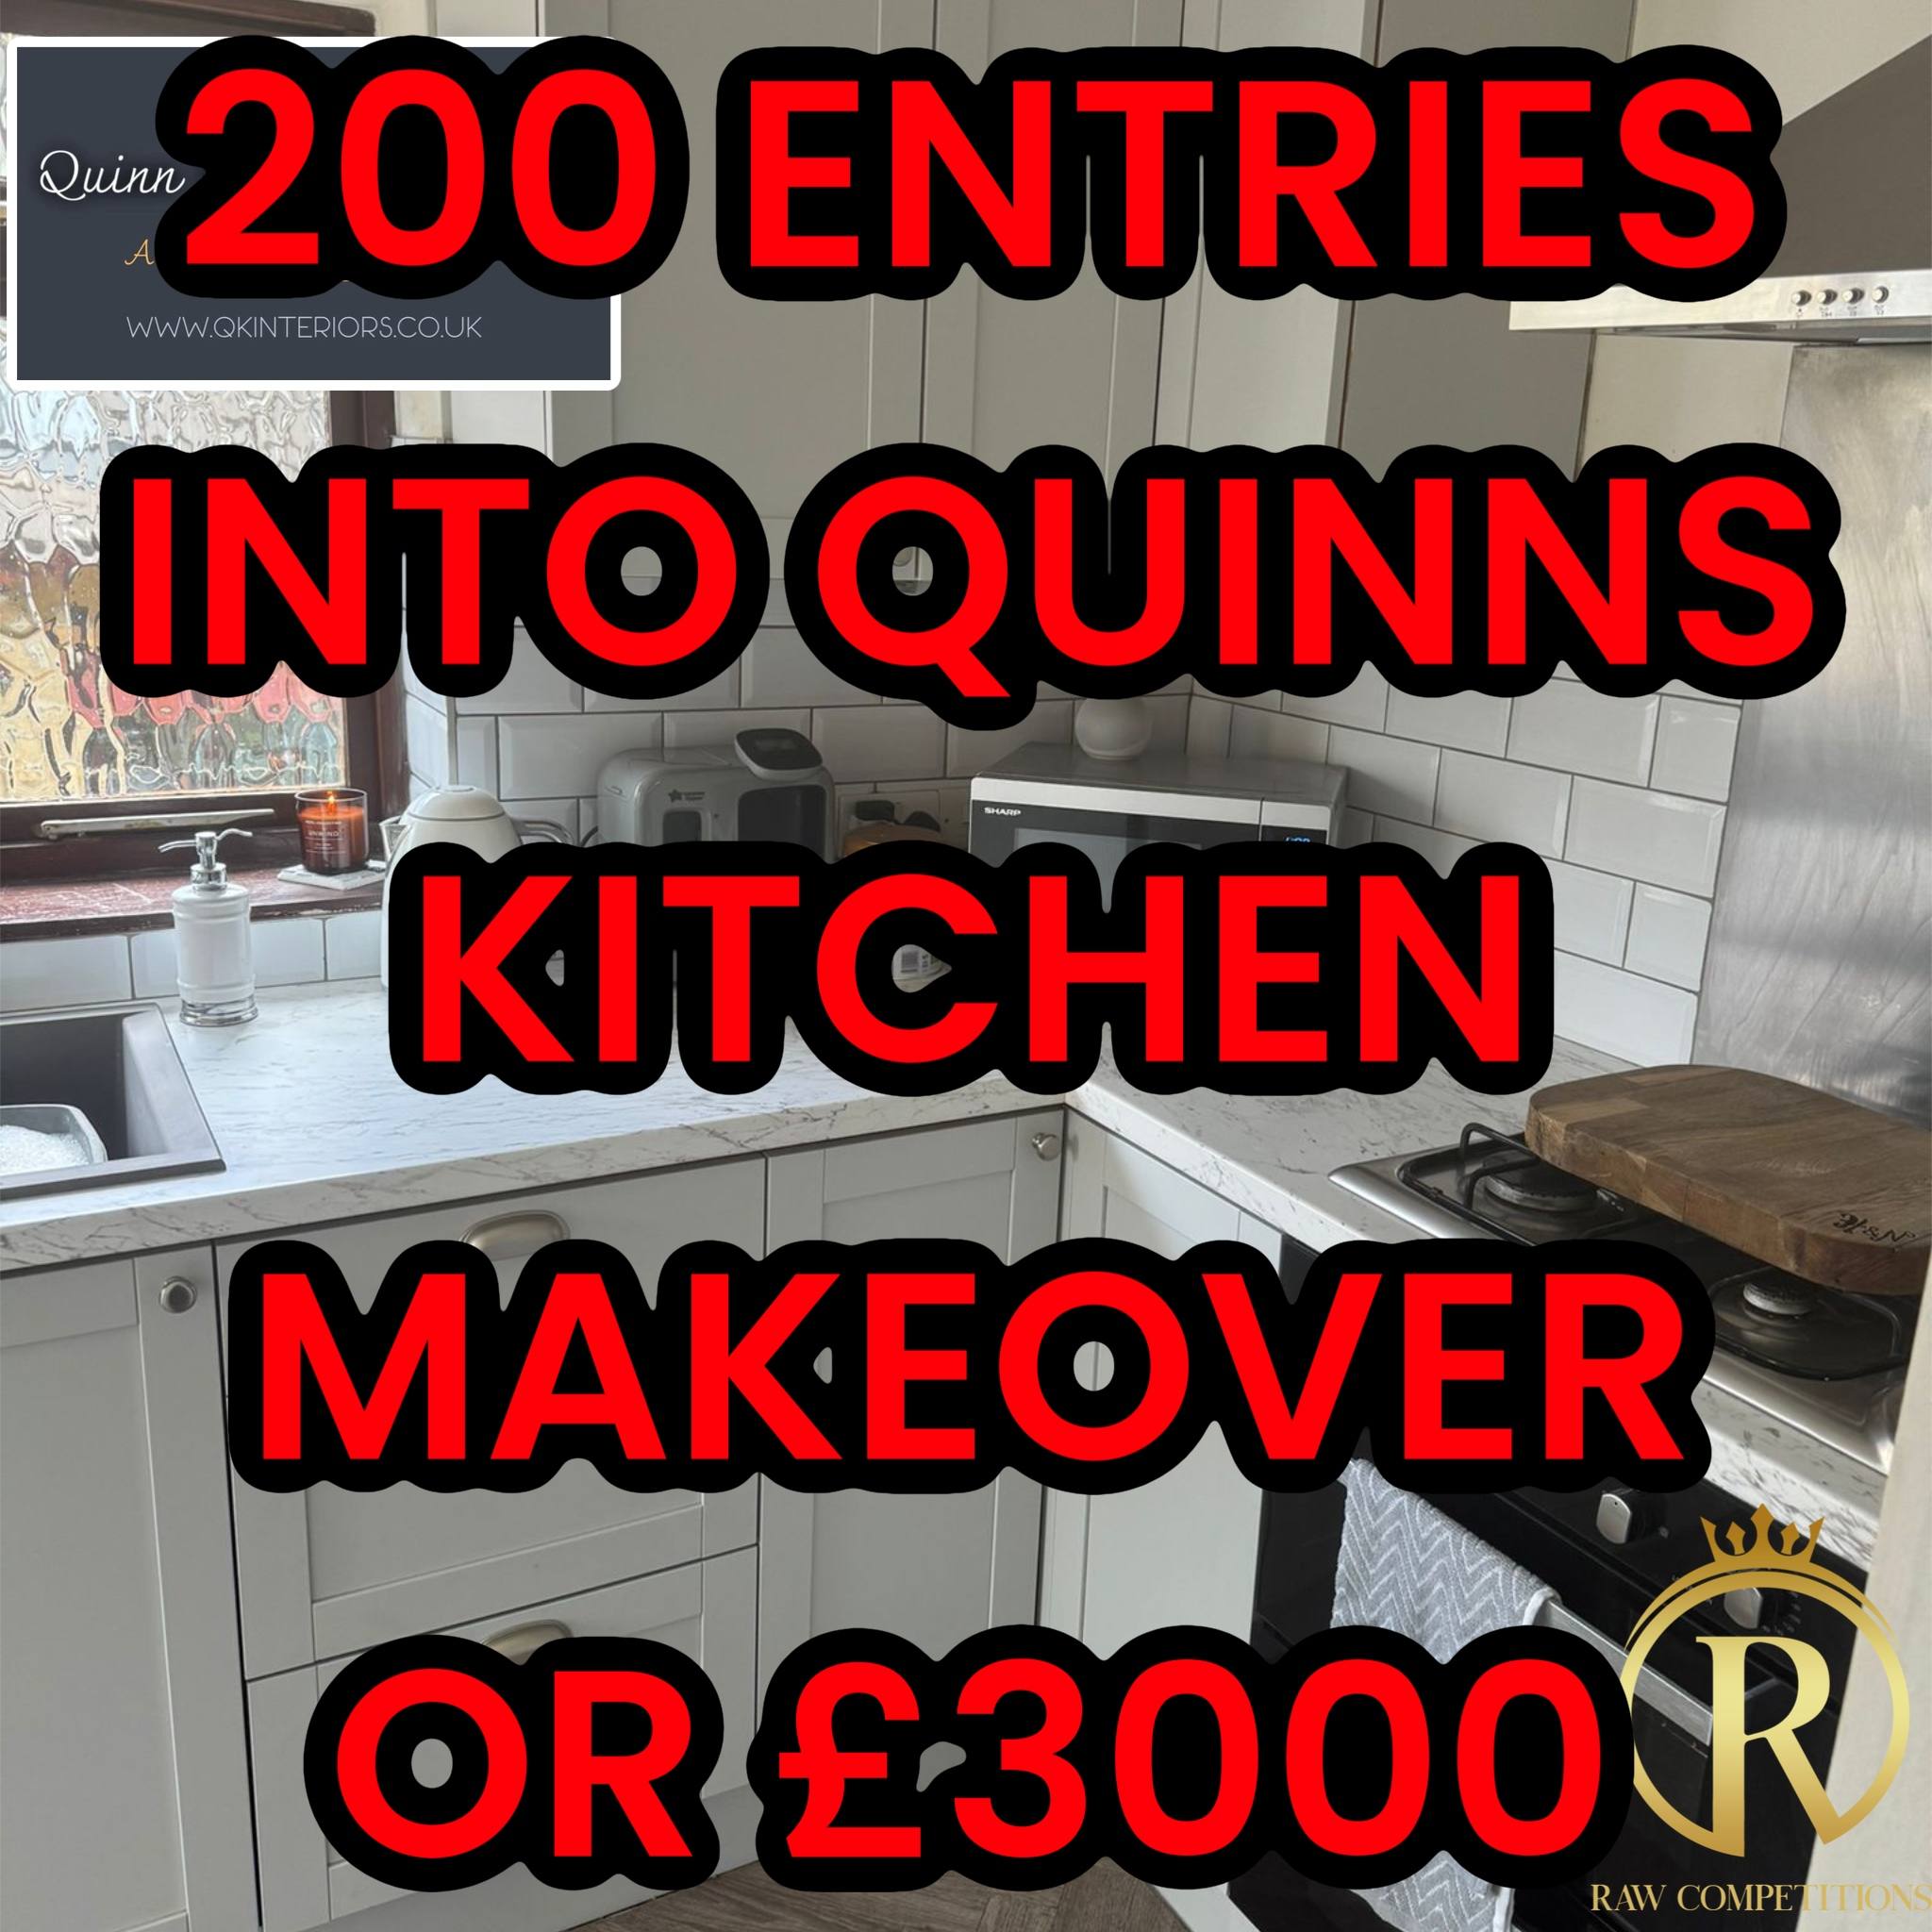 200 entries into kitchen draw